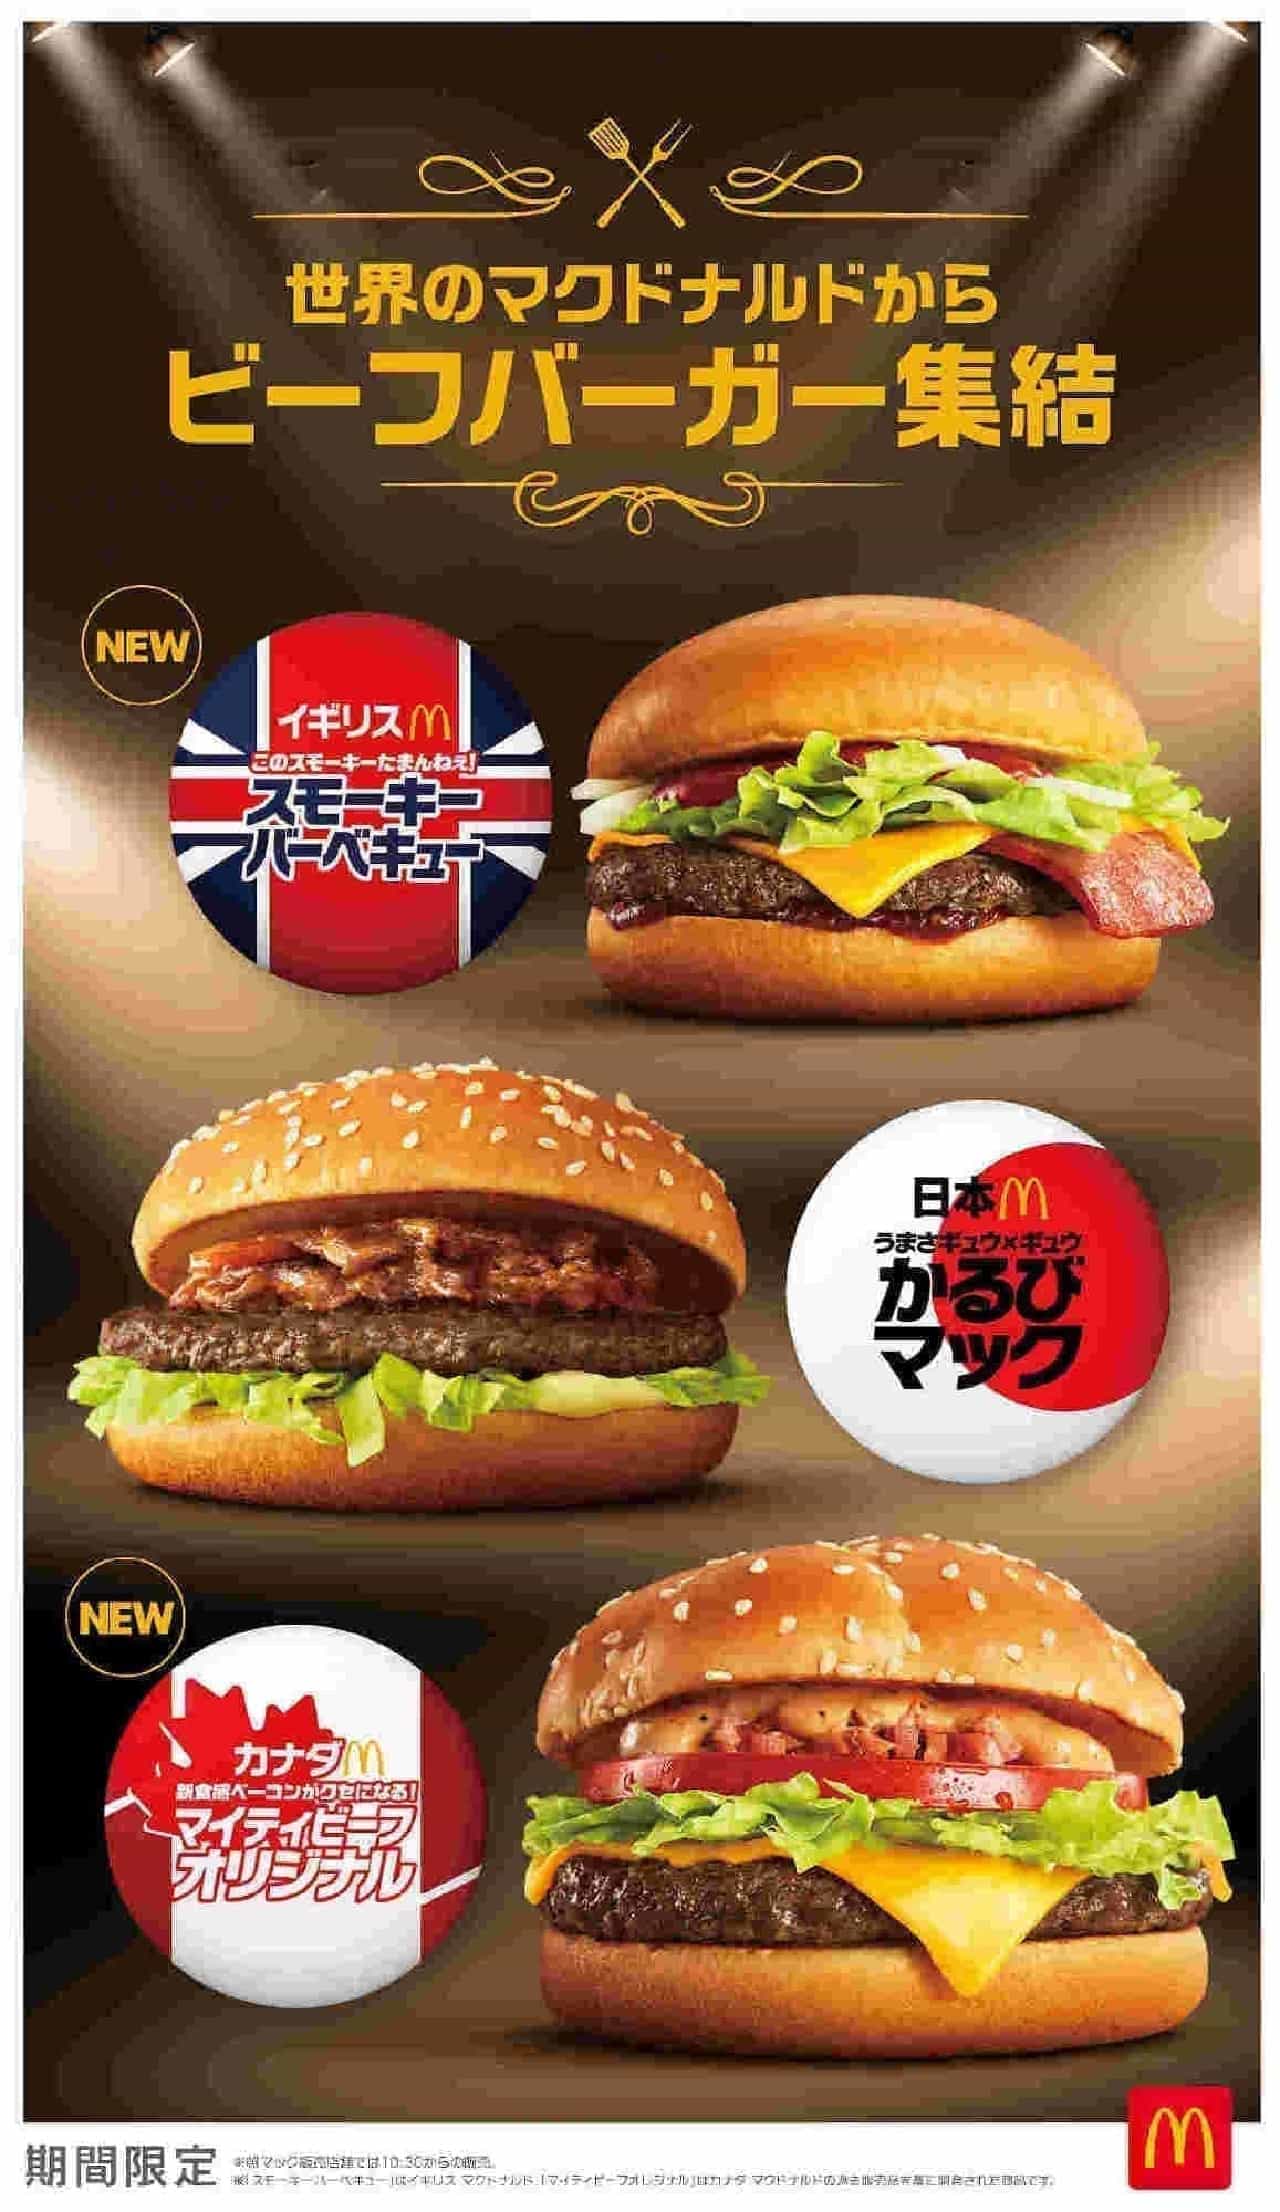 World Beef Burger on Mac